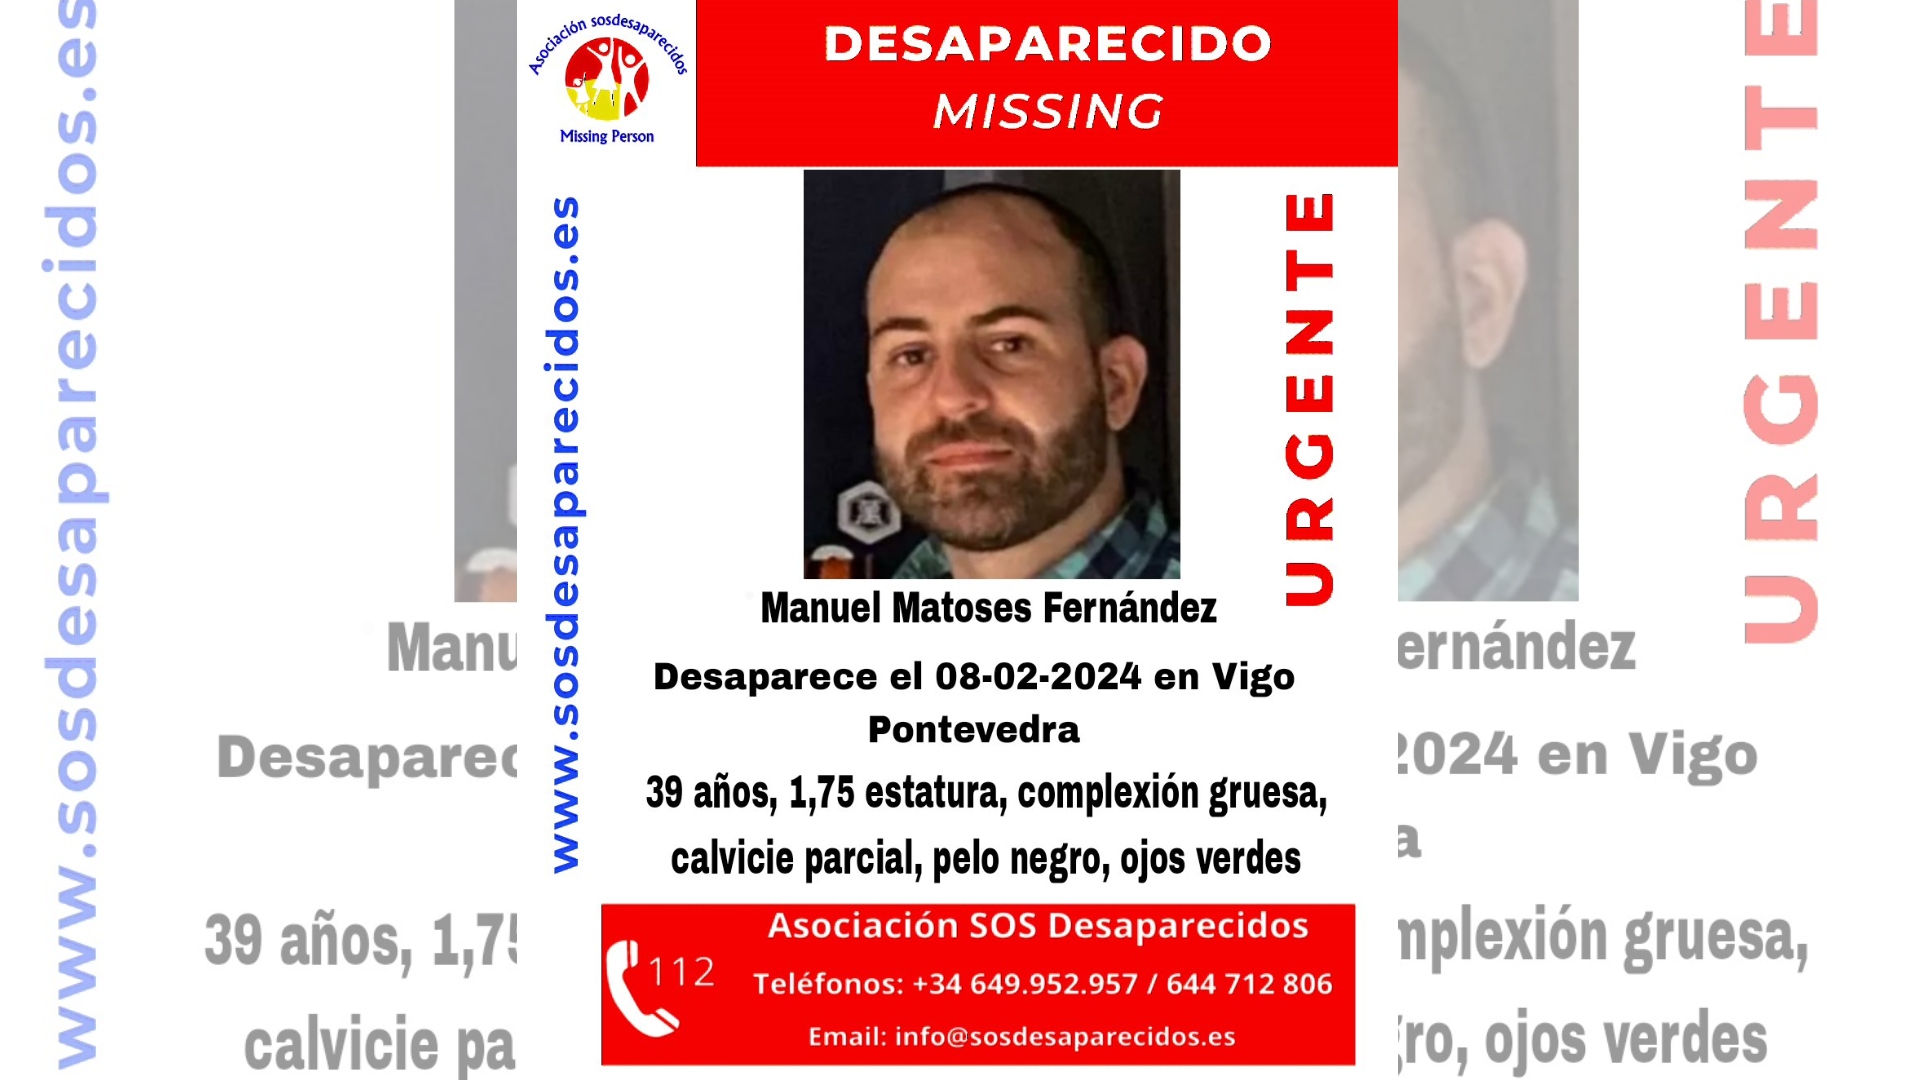 Manuel Matoses Fernández, desaparecido en Vigo desde este jueves | @SOSDESAPARECIDOS